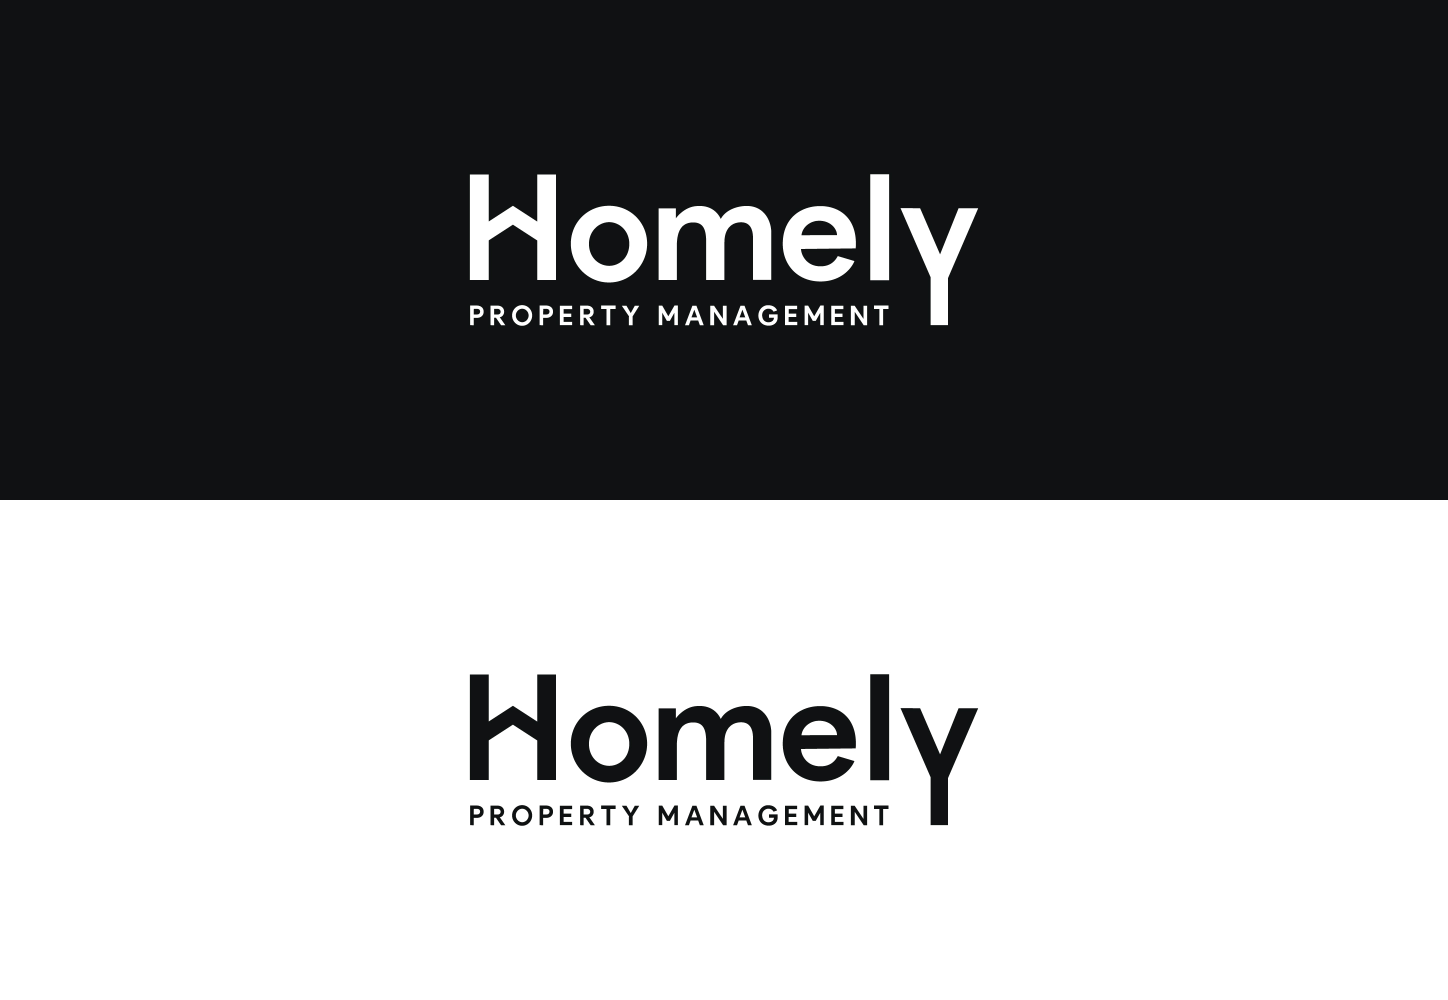 homely logo variations 1